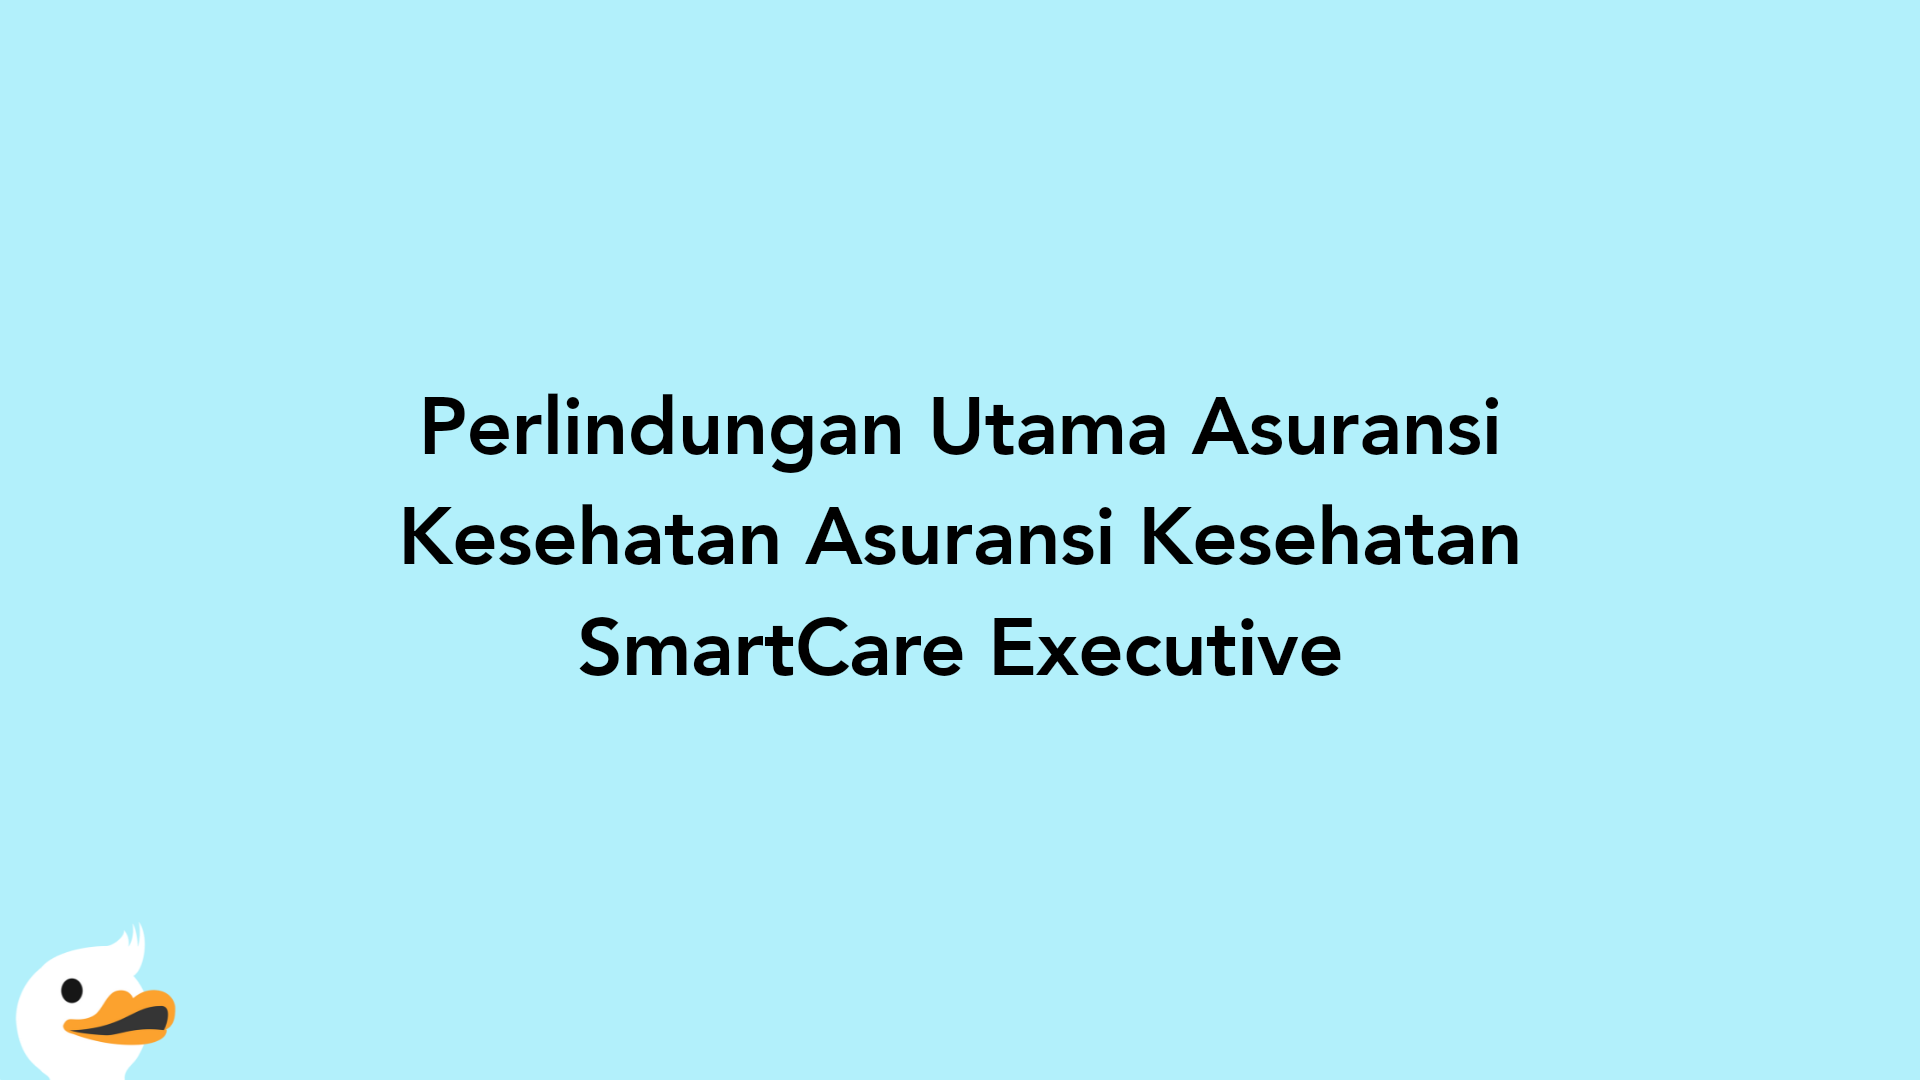 Perlindungan Utama Asuransi Kesehatan Asuransi Kesehatan SmartCare Executive